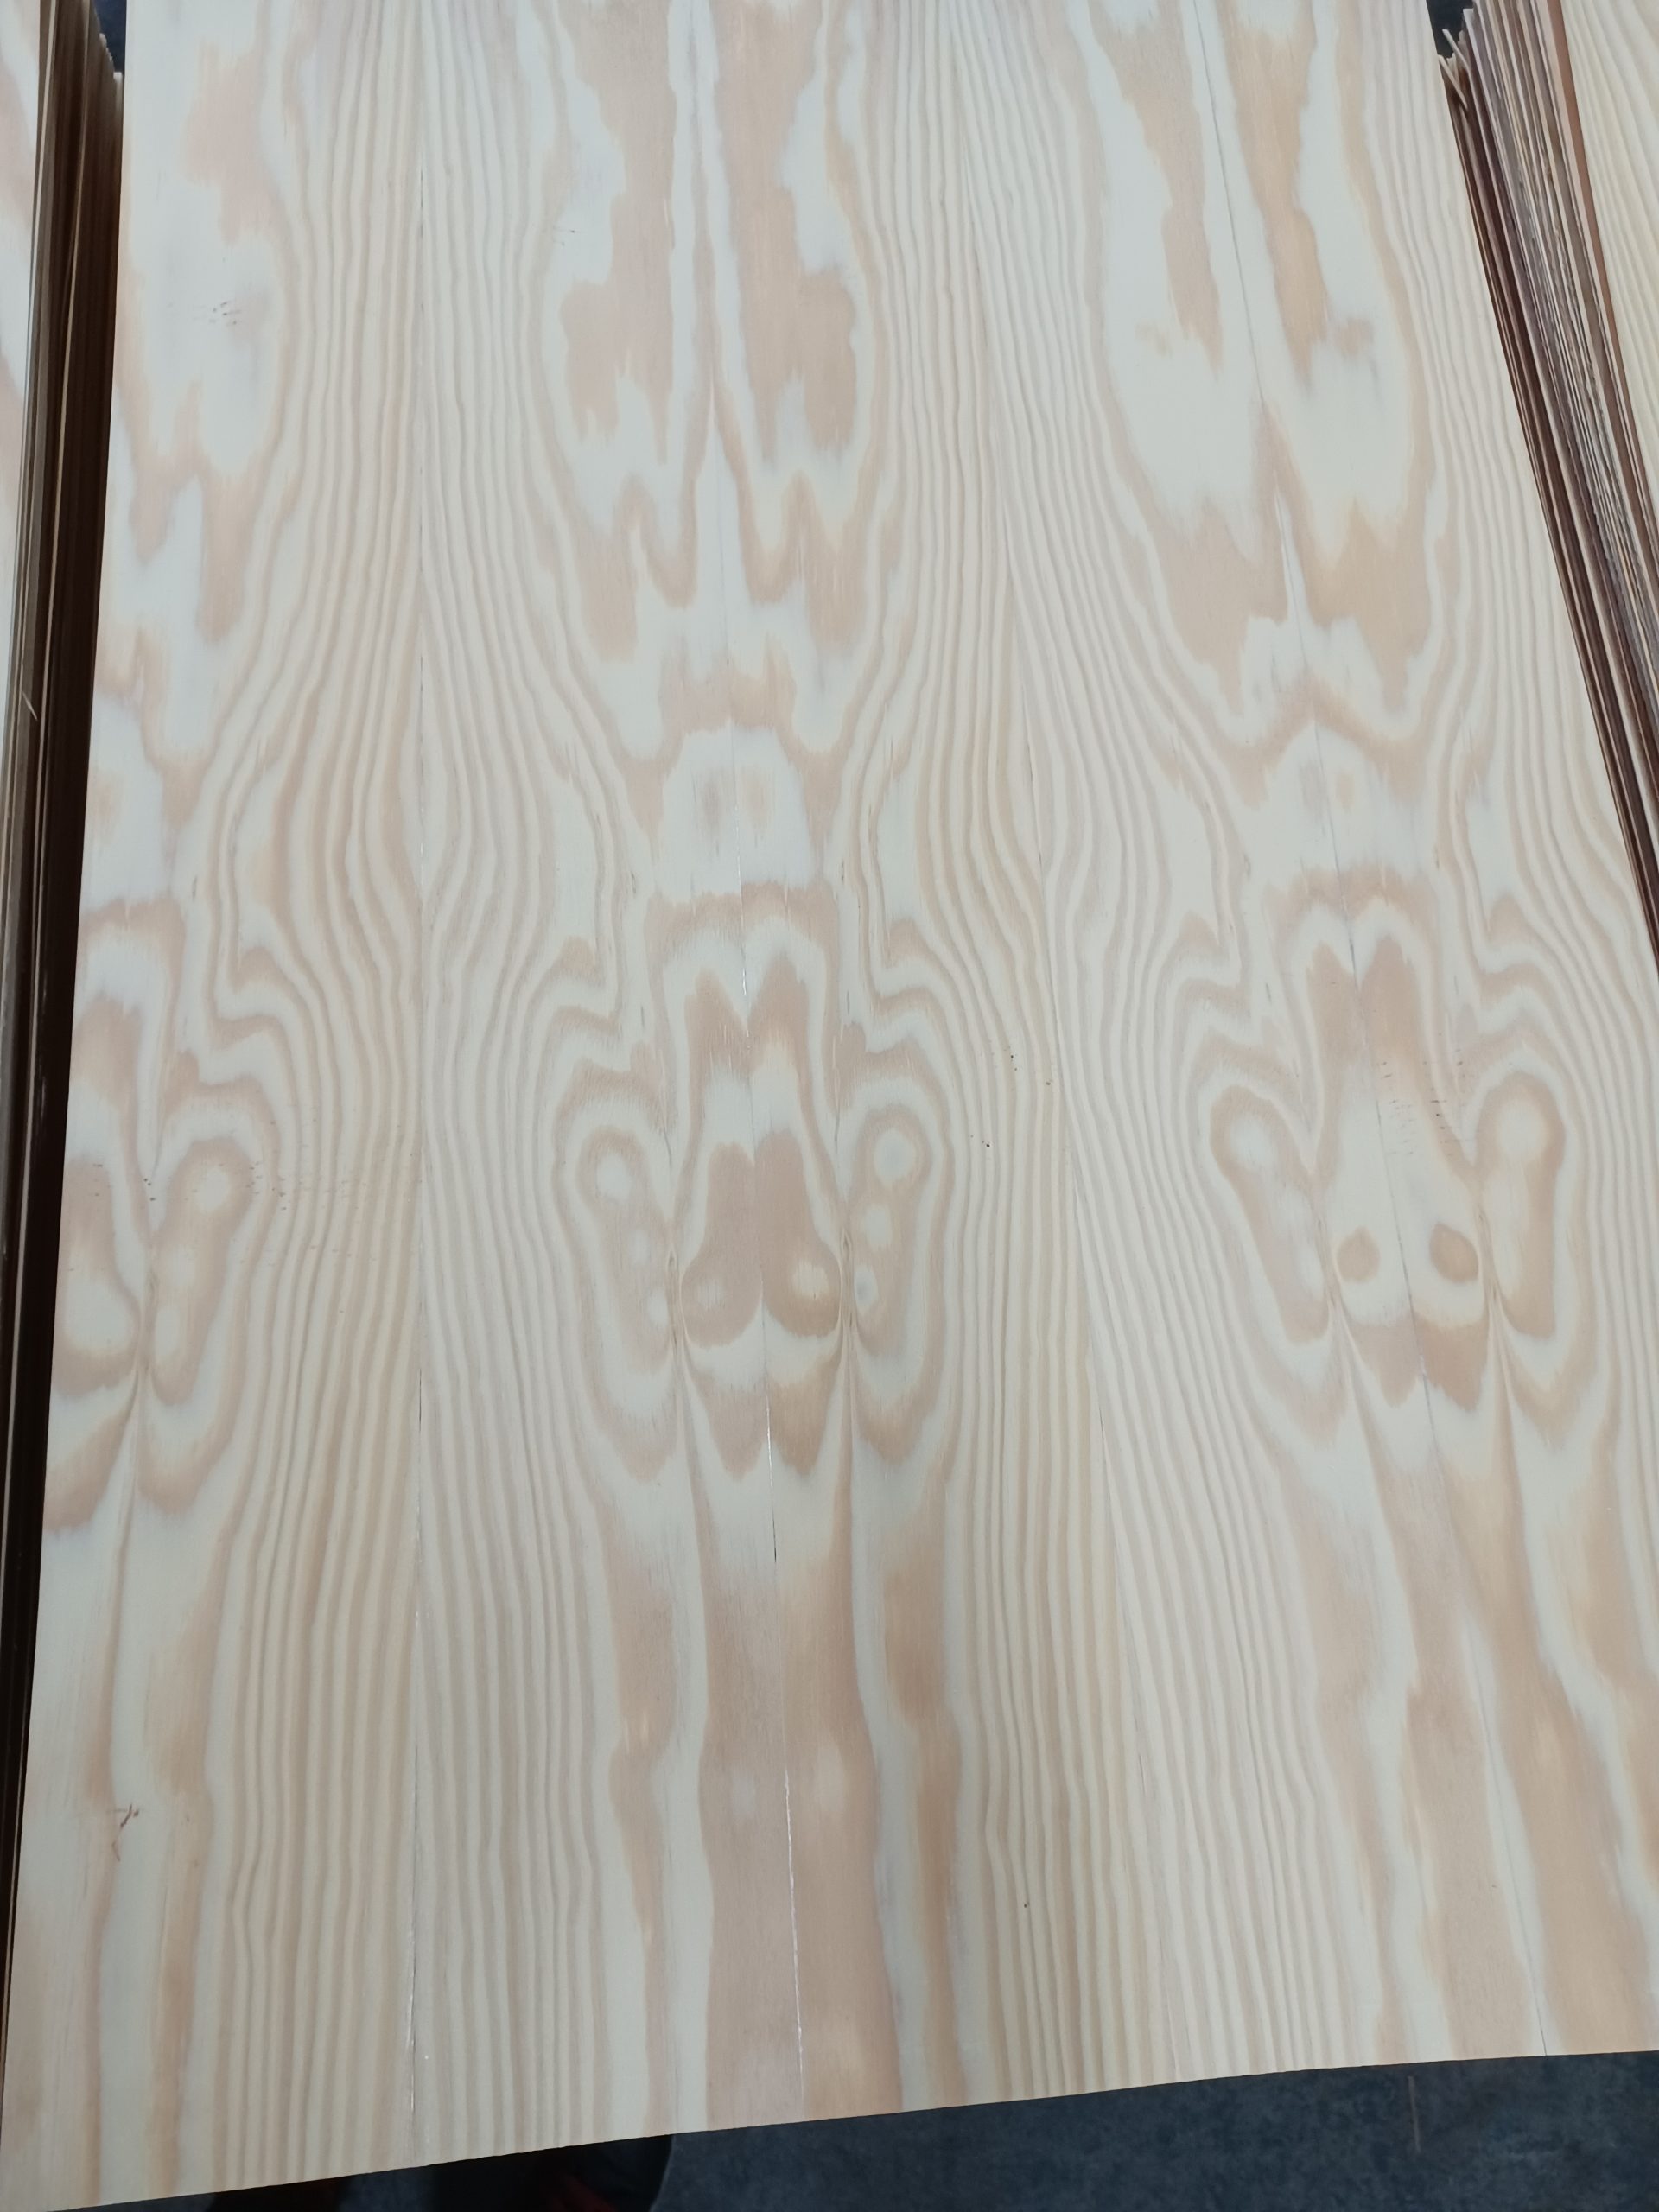 Brazilian pine thick veneers panel